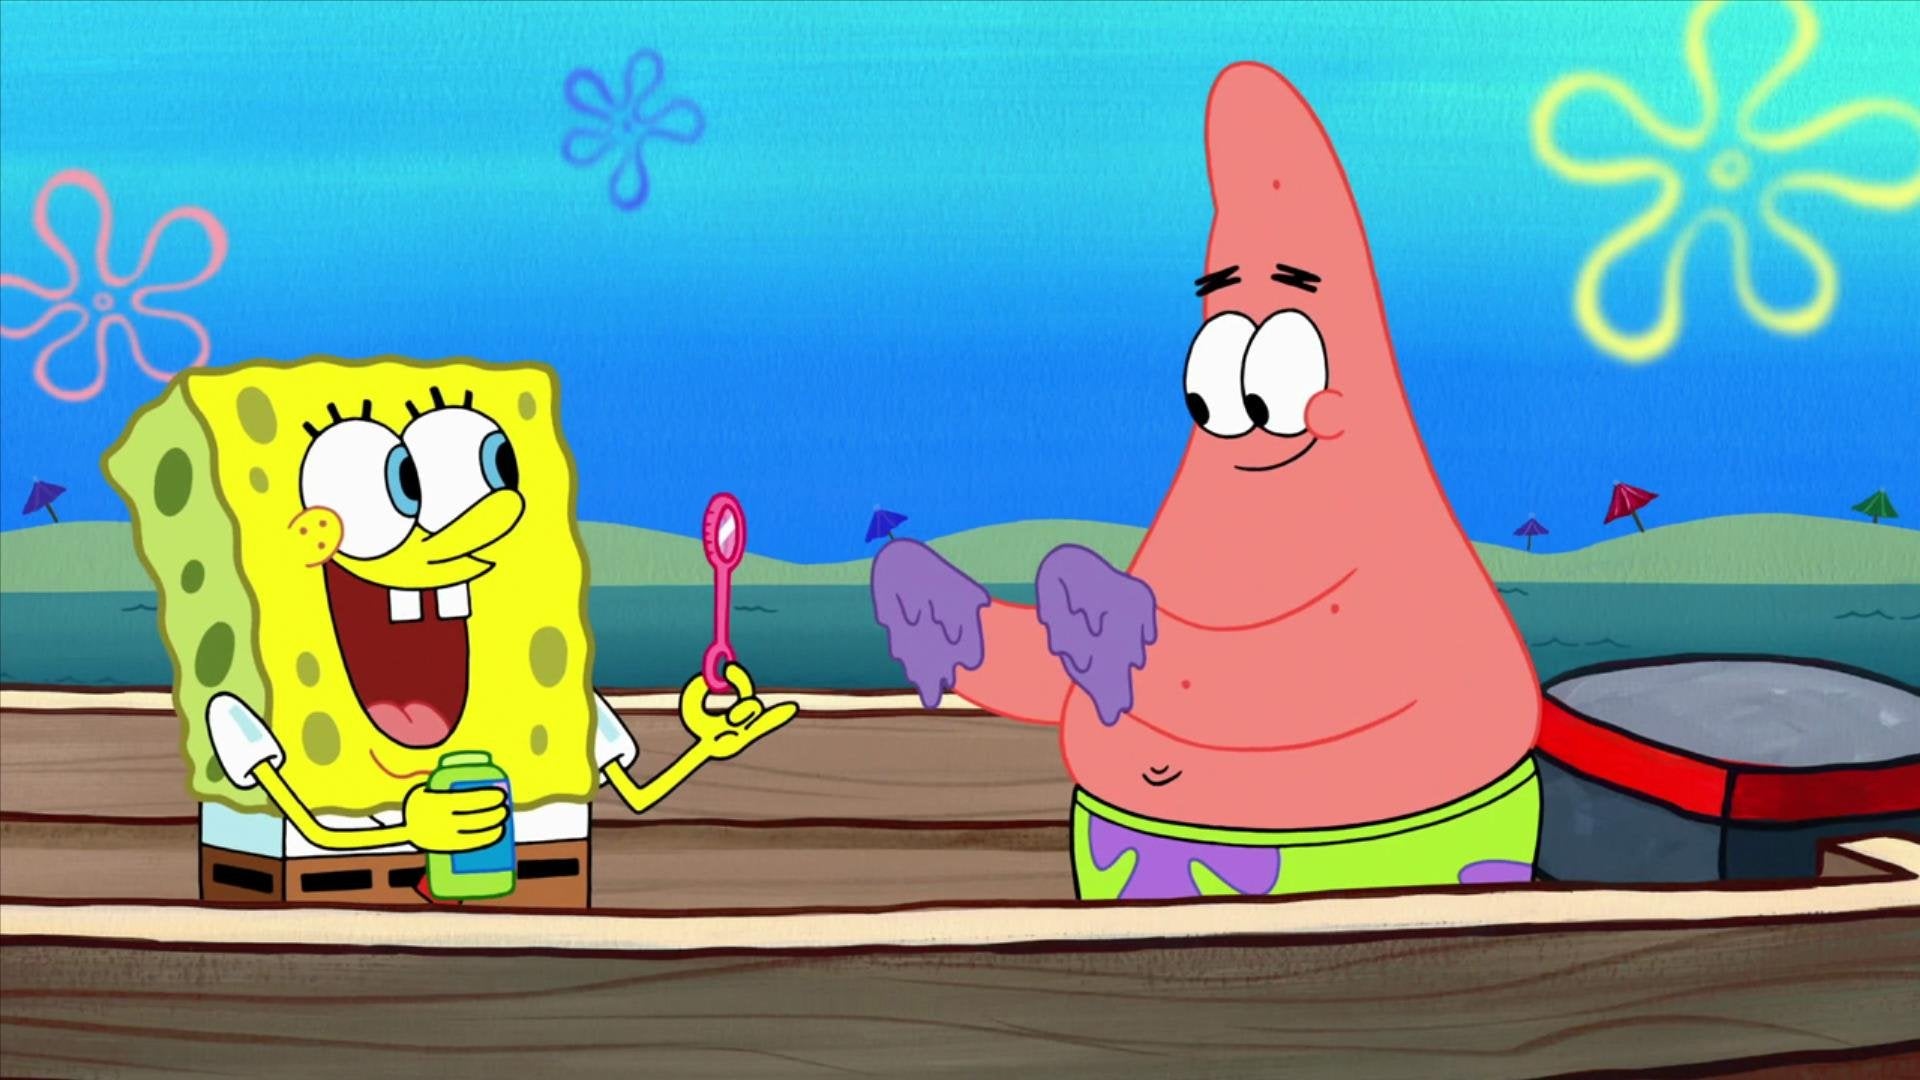 Spongebob Squarepants: The Next 100 Episodes - Seasons 6-9